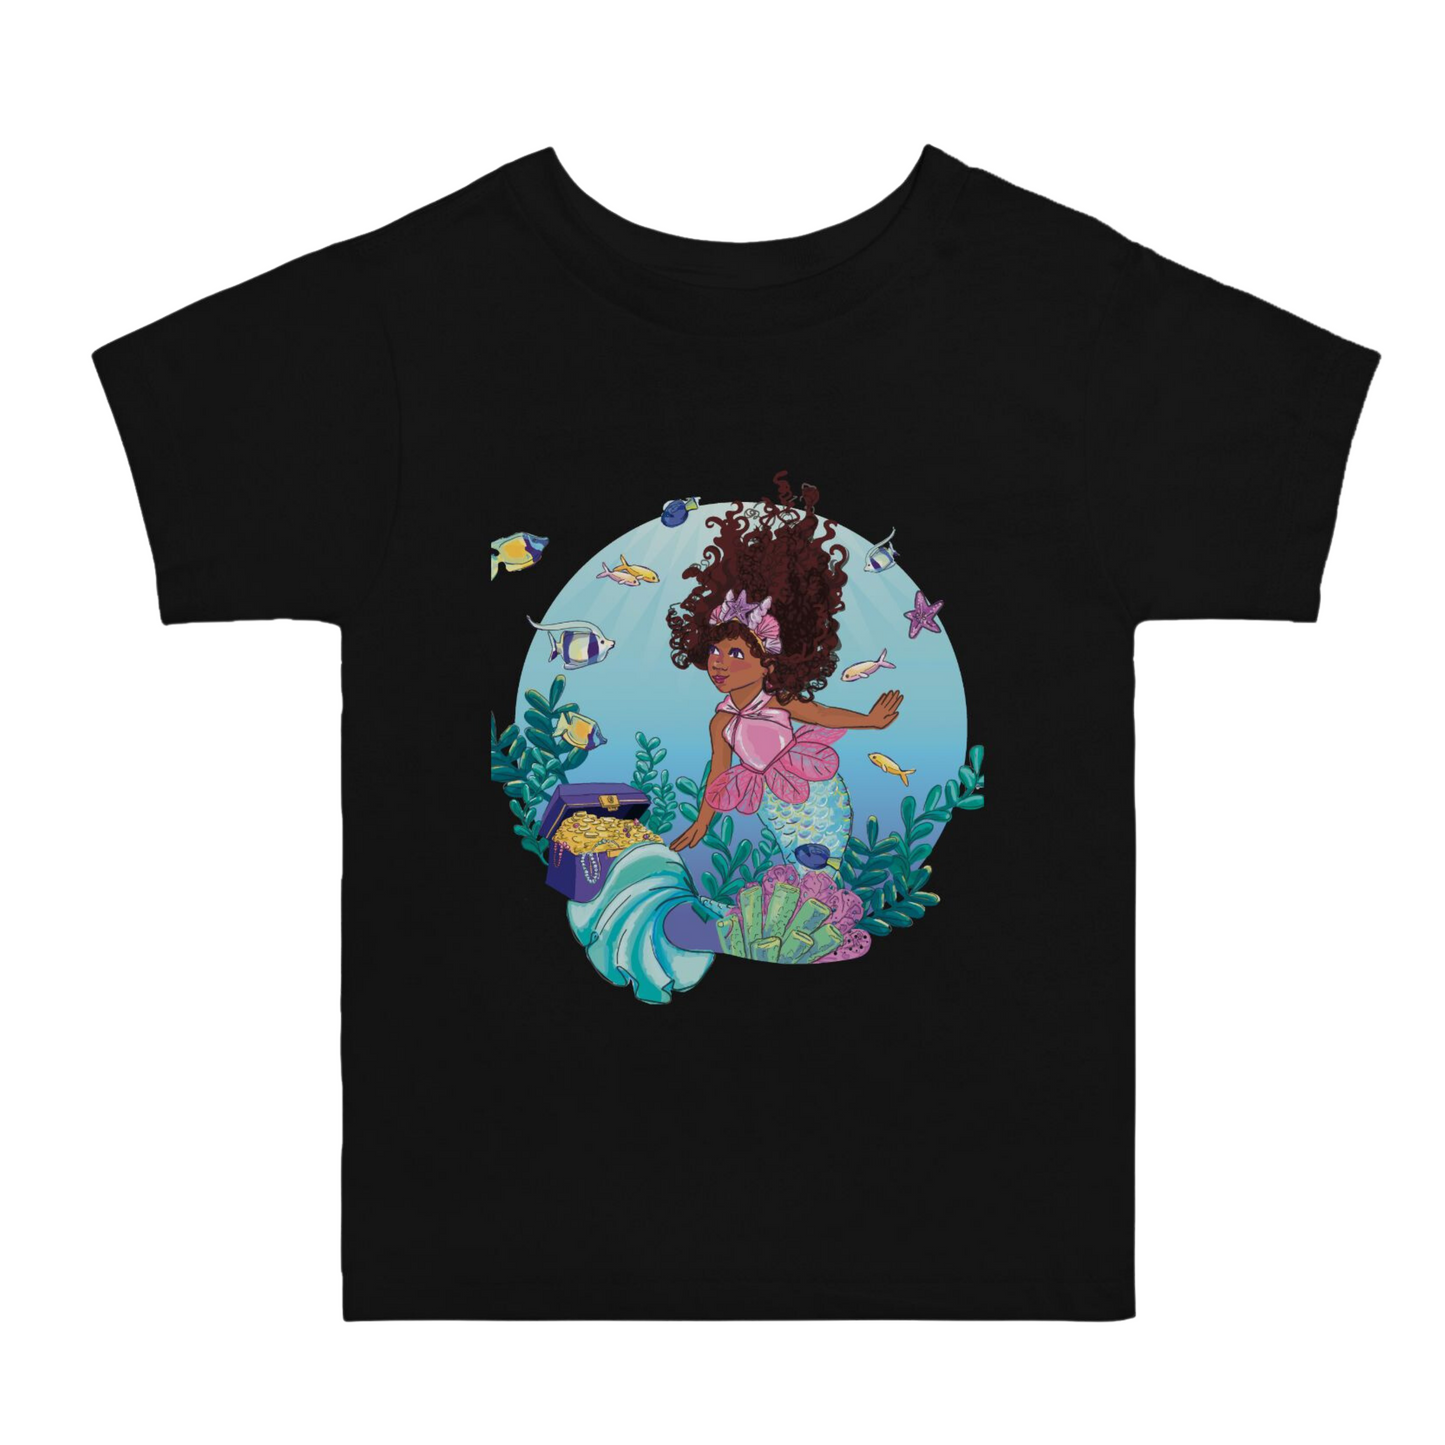 Toddler Mermaid Short Sleeve Shirt (2T-5T)